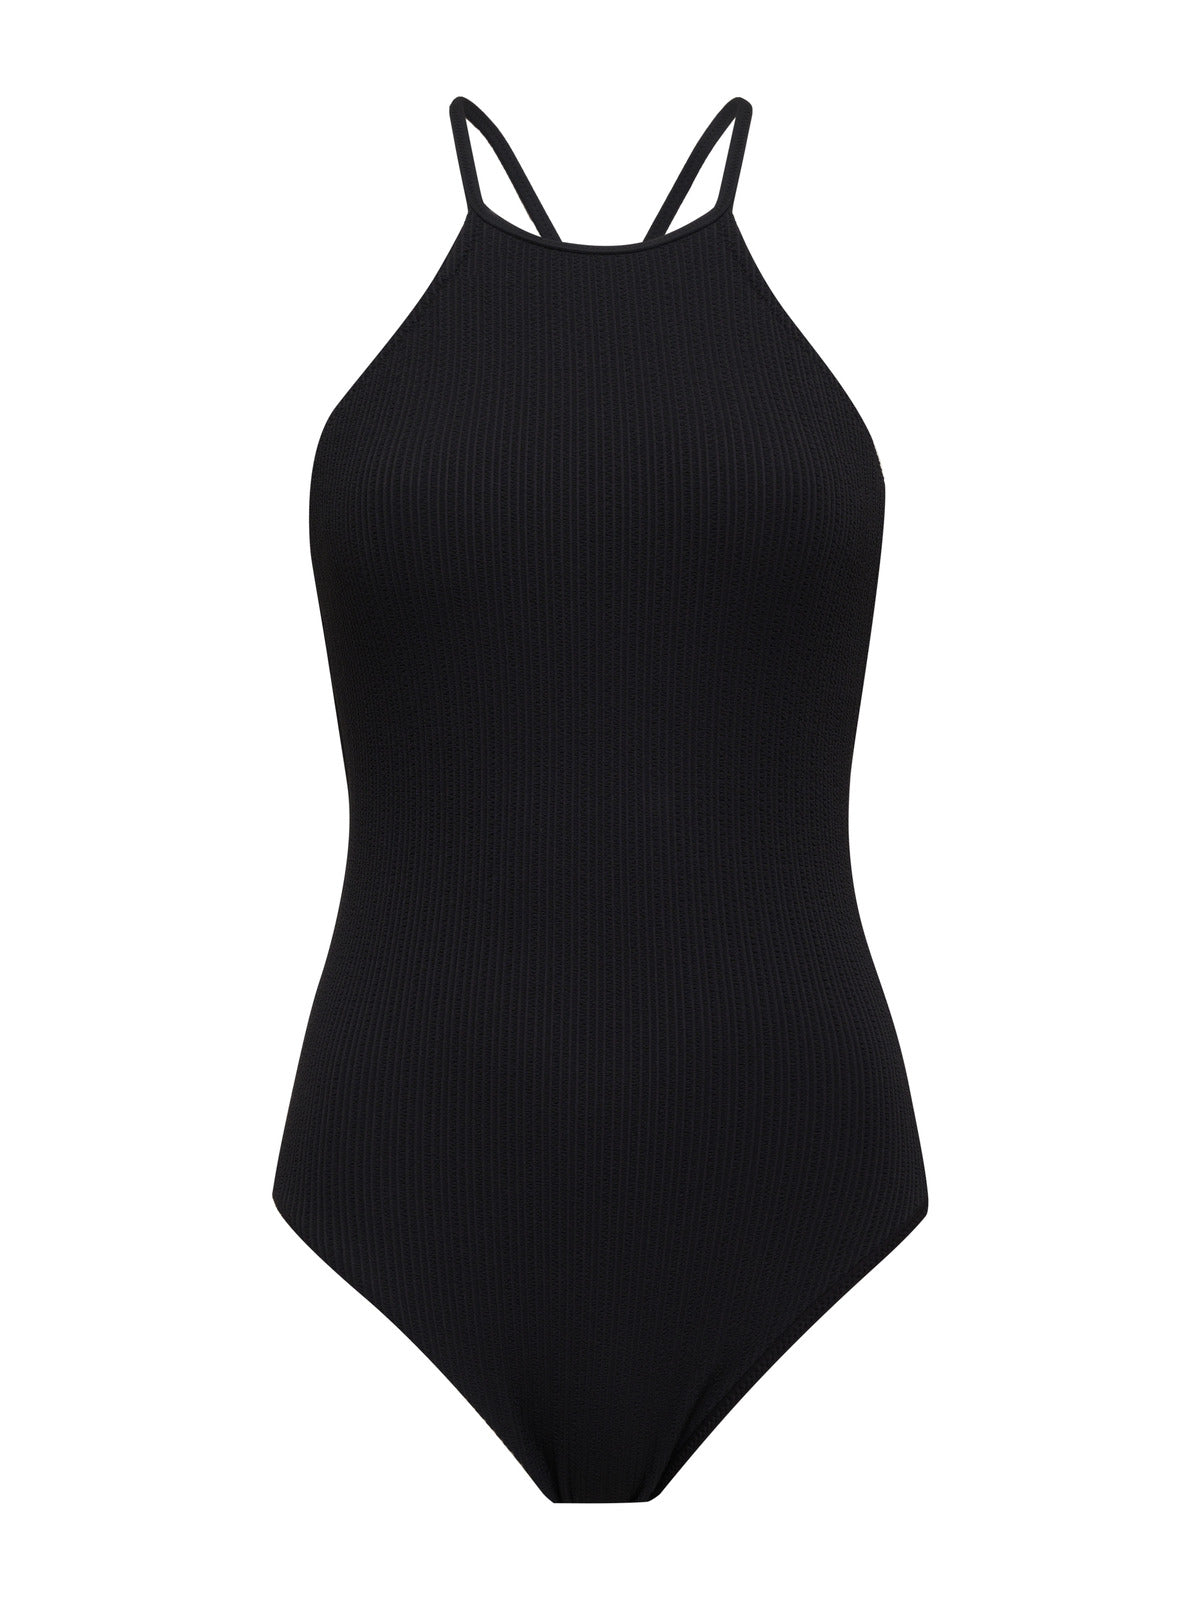 Sandbar Solids High Neck One-Piece Swimsuit Black